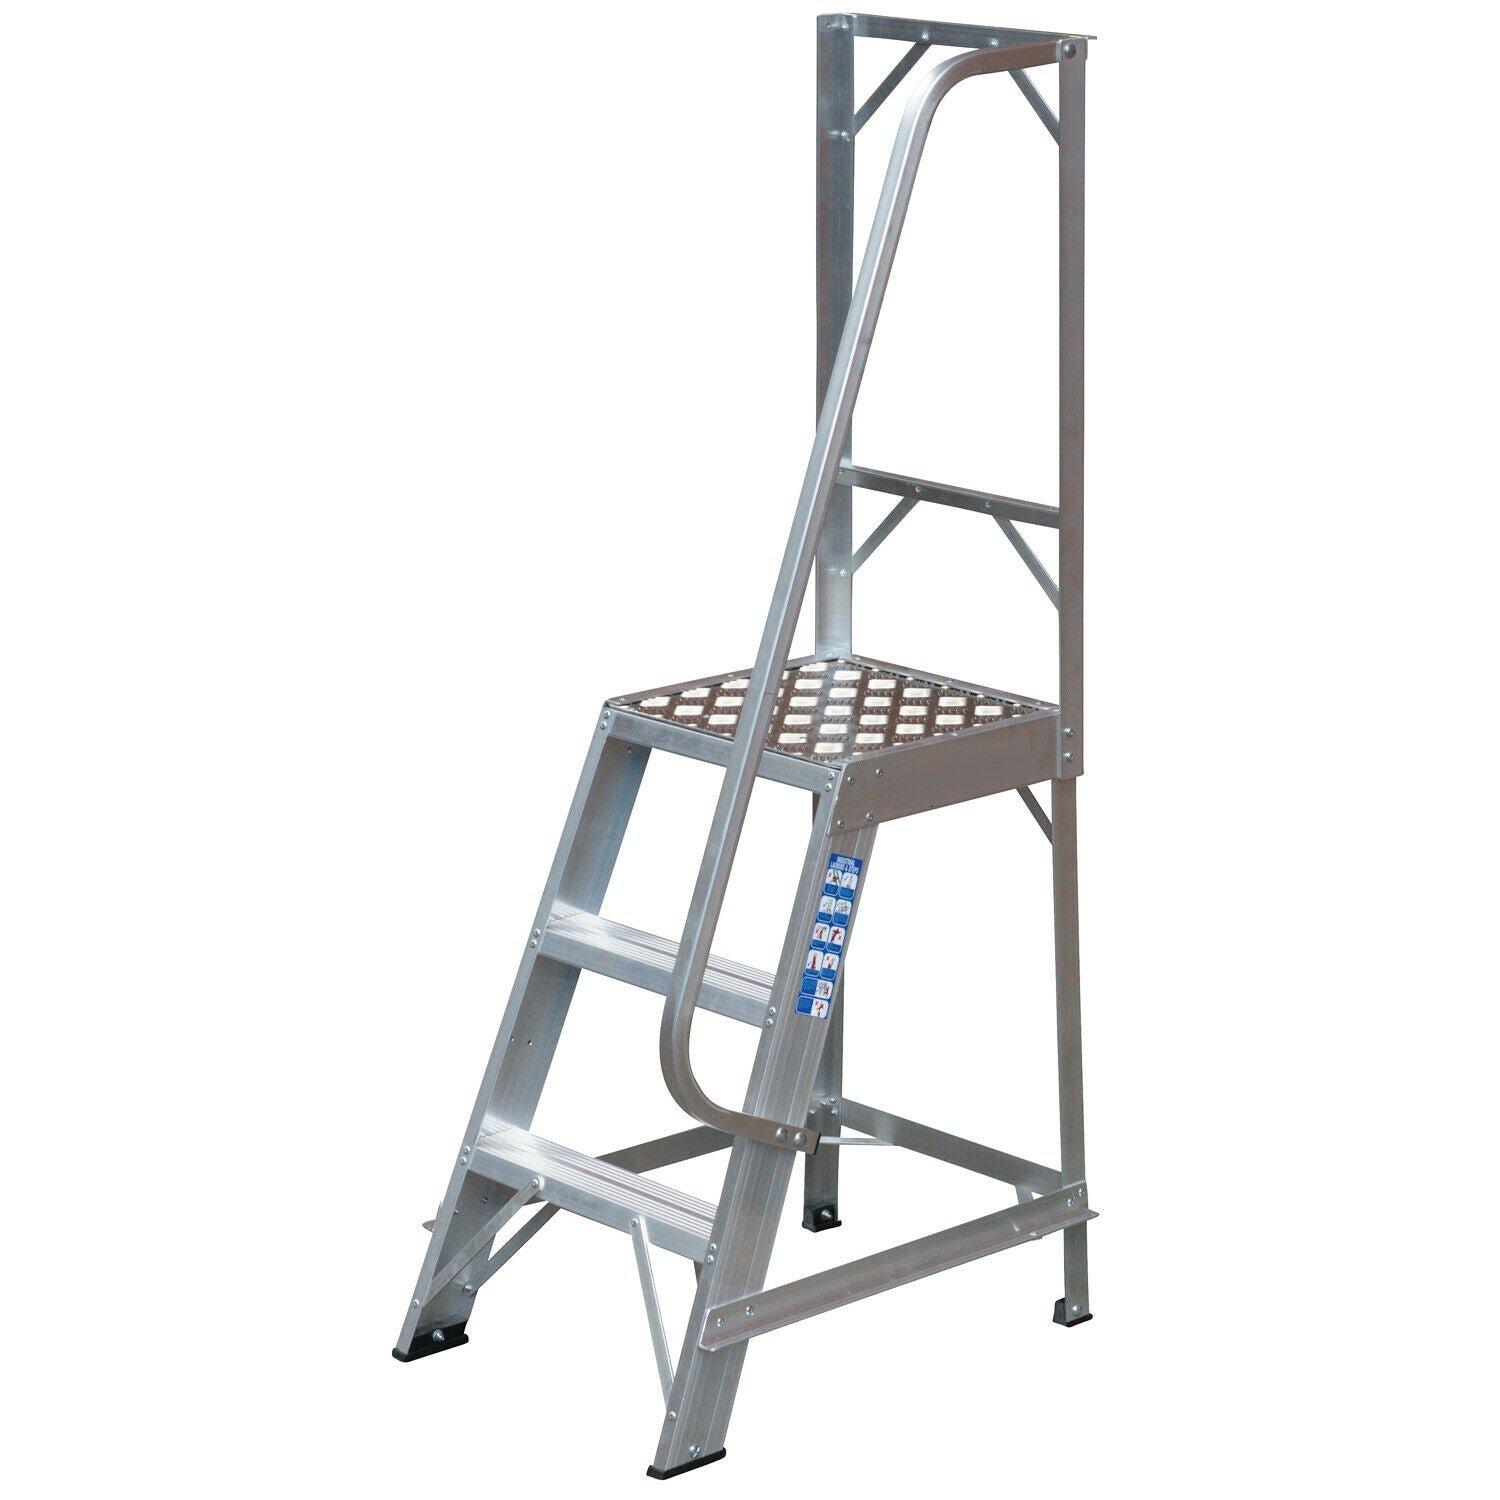 0.7m Heavy Duty Single Sided Fixed Step Ladders Handrail Platform Safety Barrier